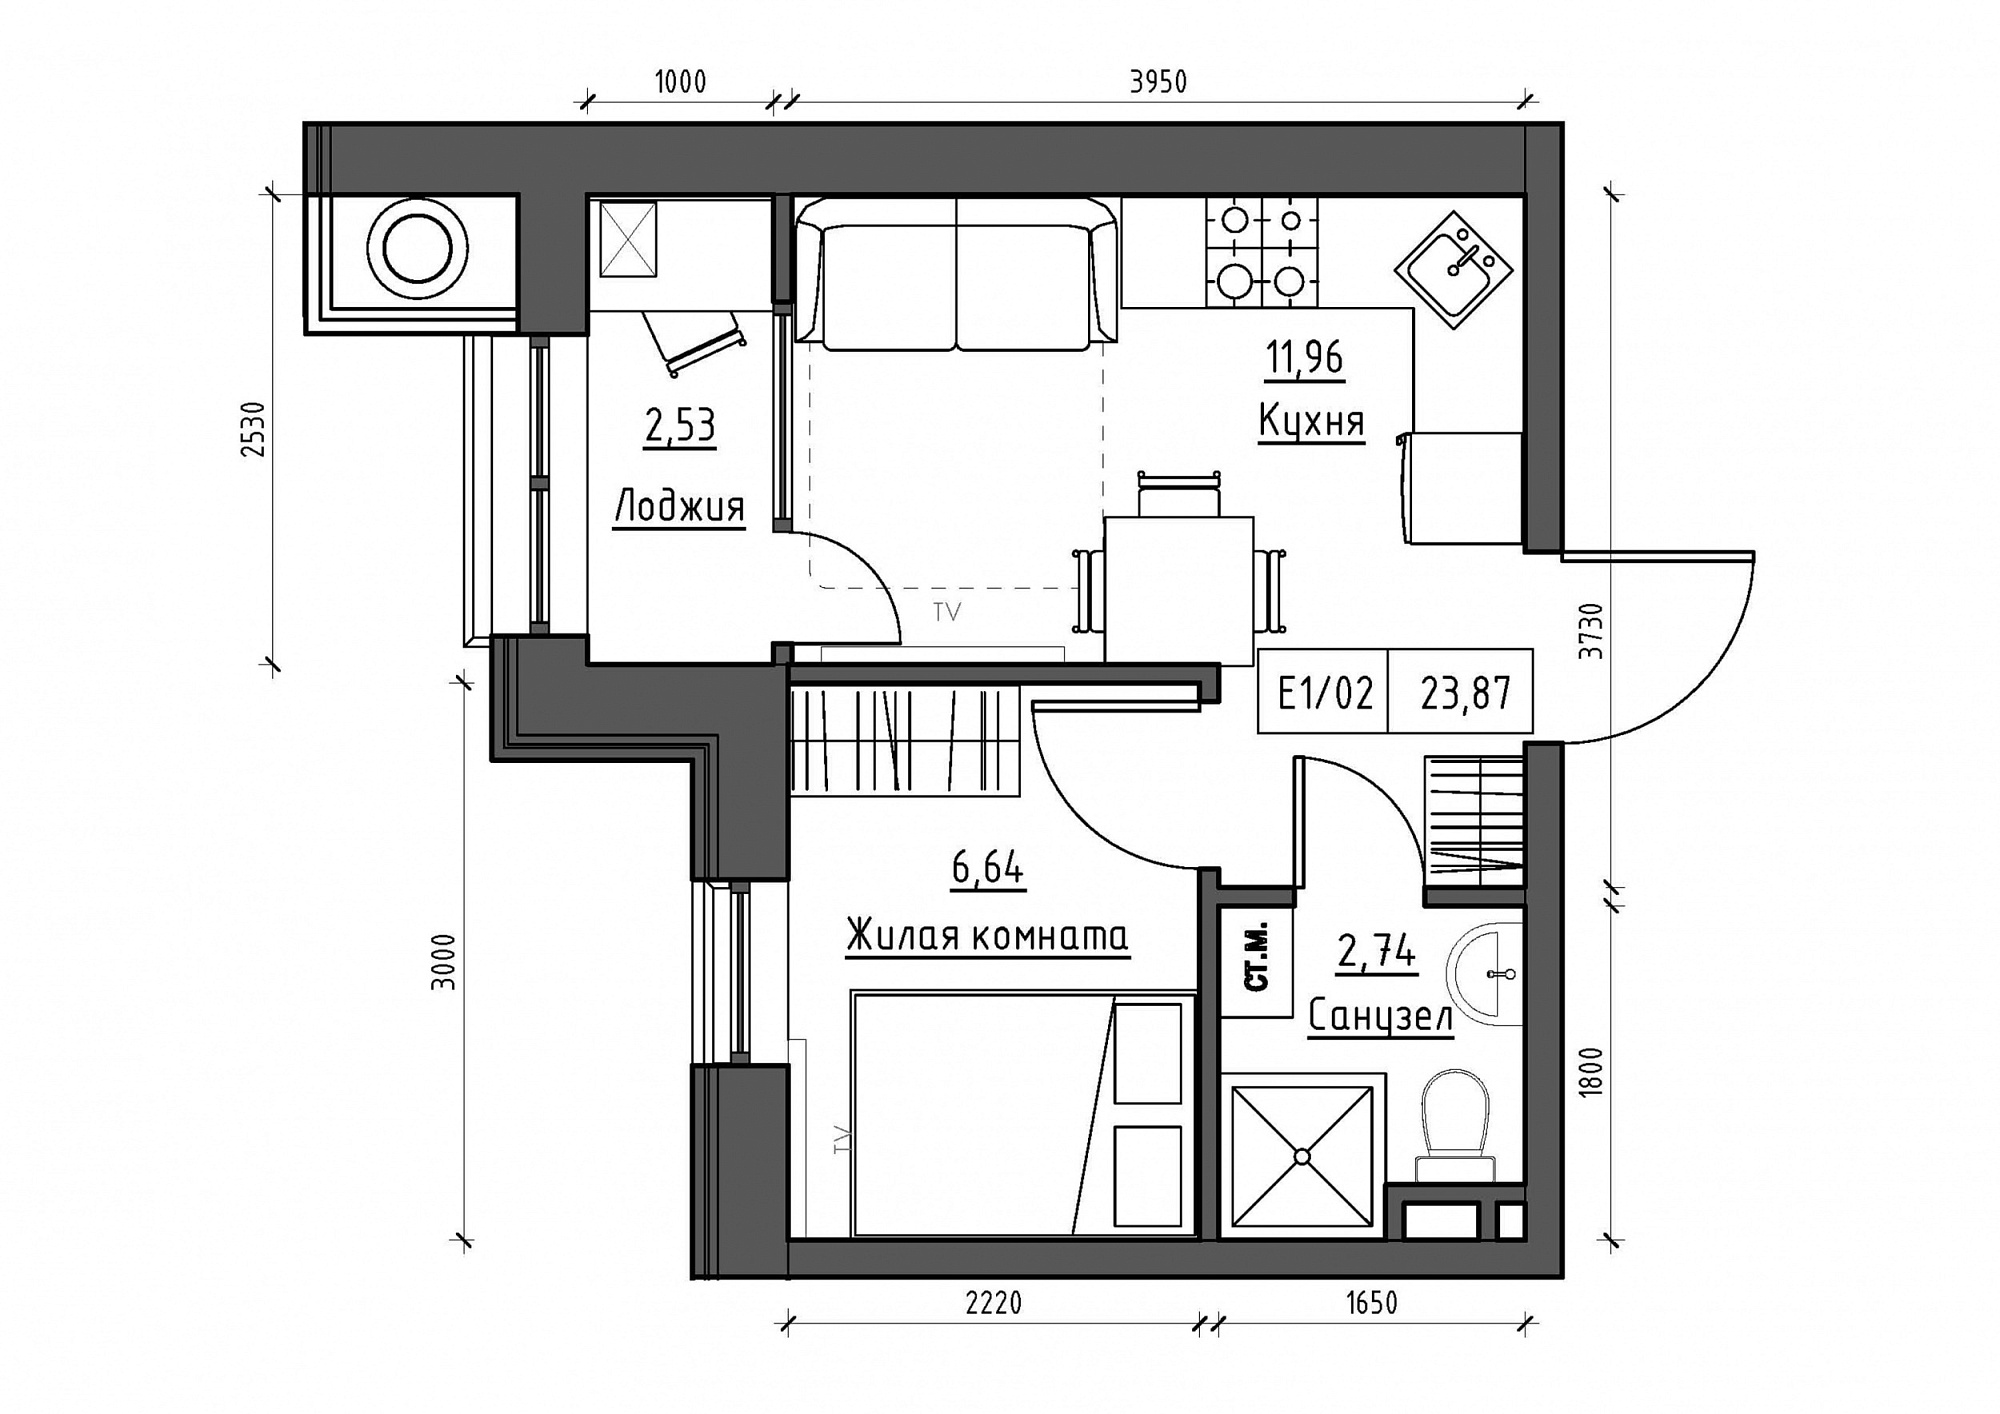 Planning 1-rm flats area 23.87m2, KS-011-04/0001.